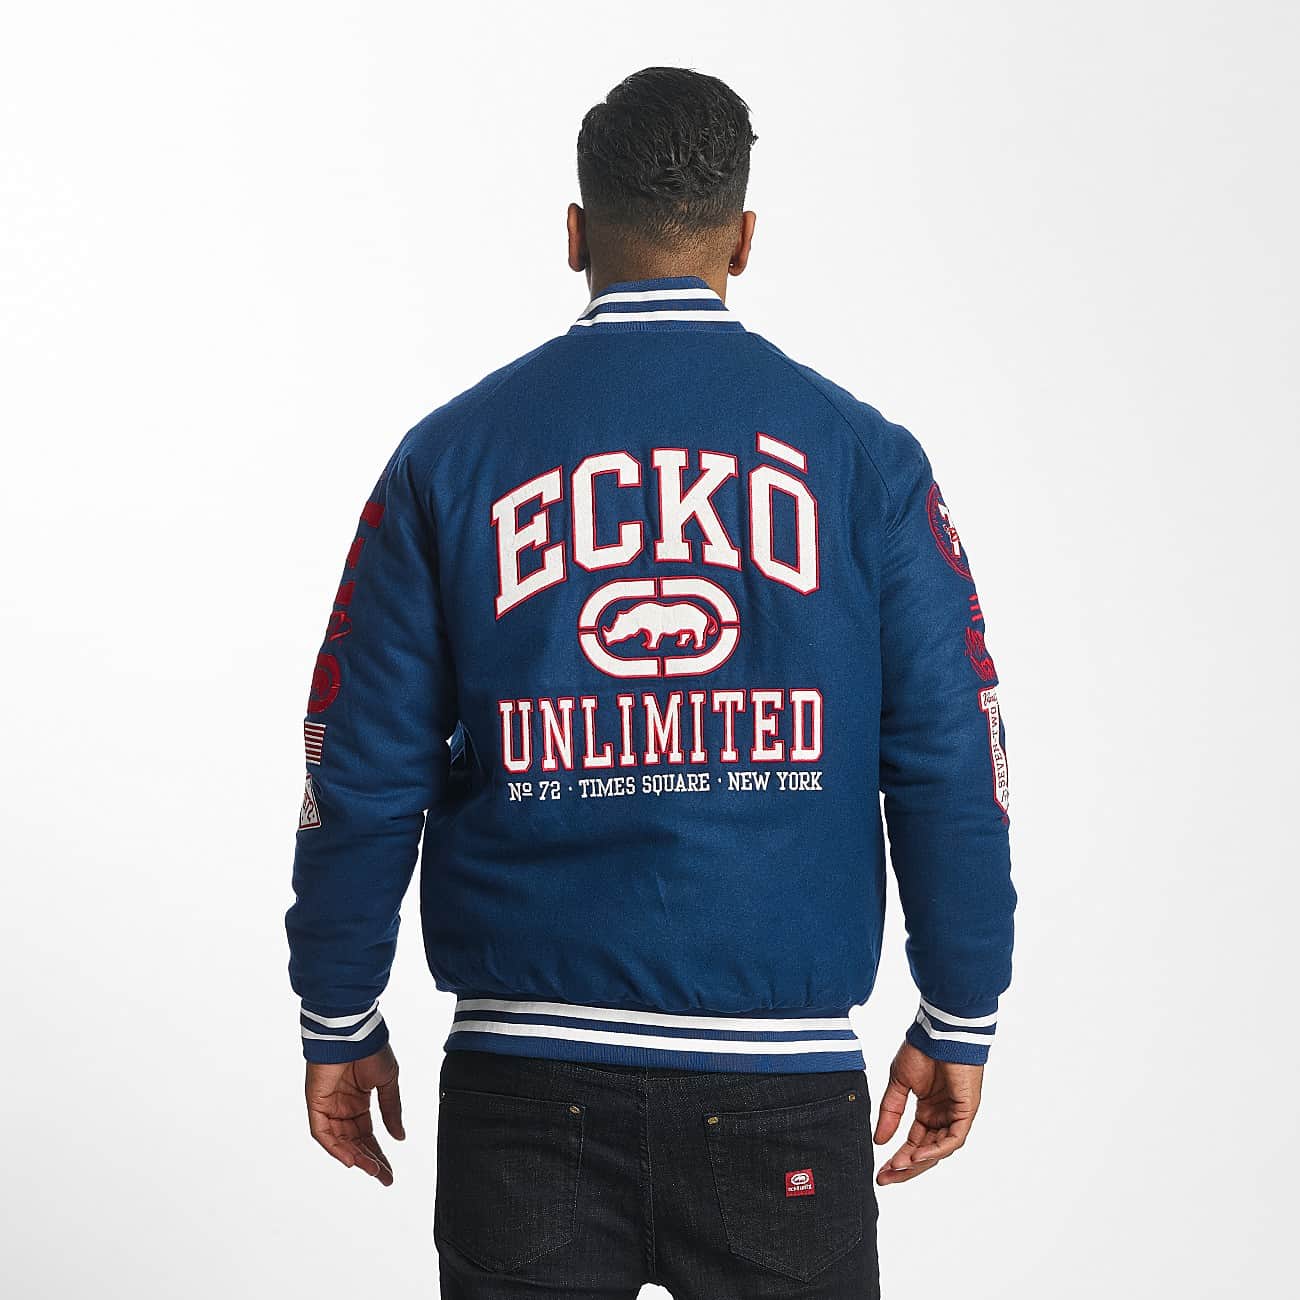 Ecko Unltd Logo - ECKO UNLTD BIG LOGO JACKET BLUE - HIP HOP SHOP